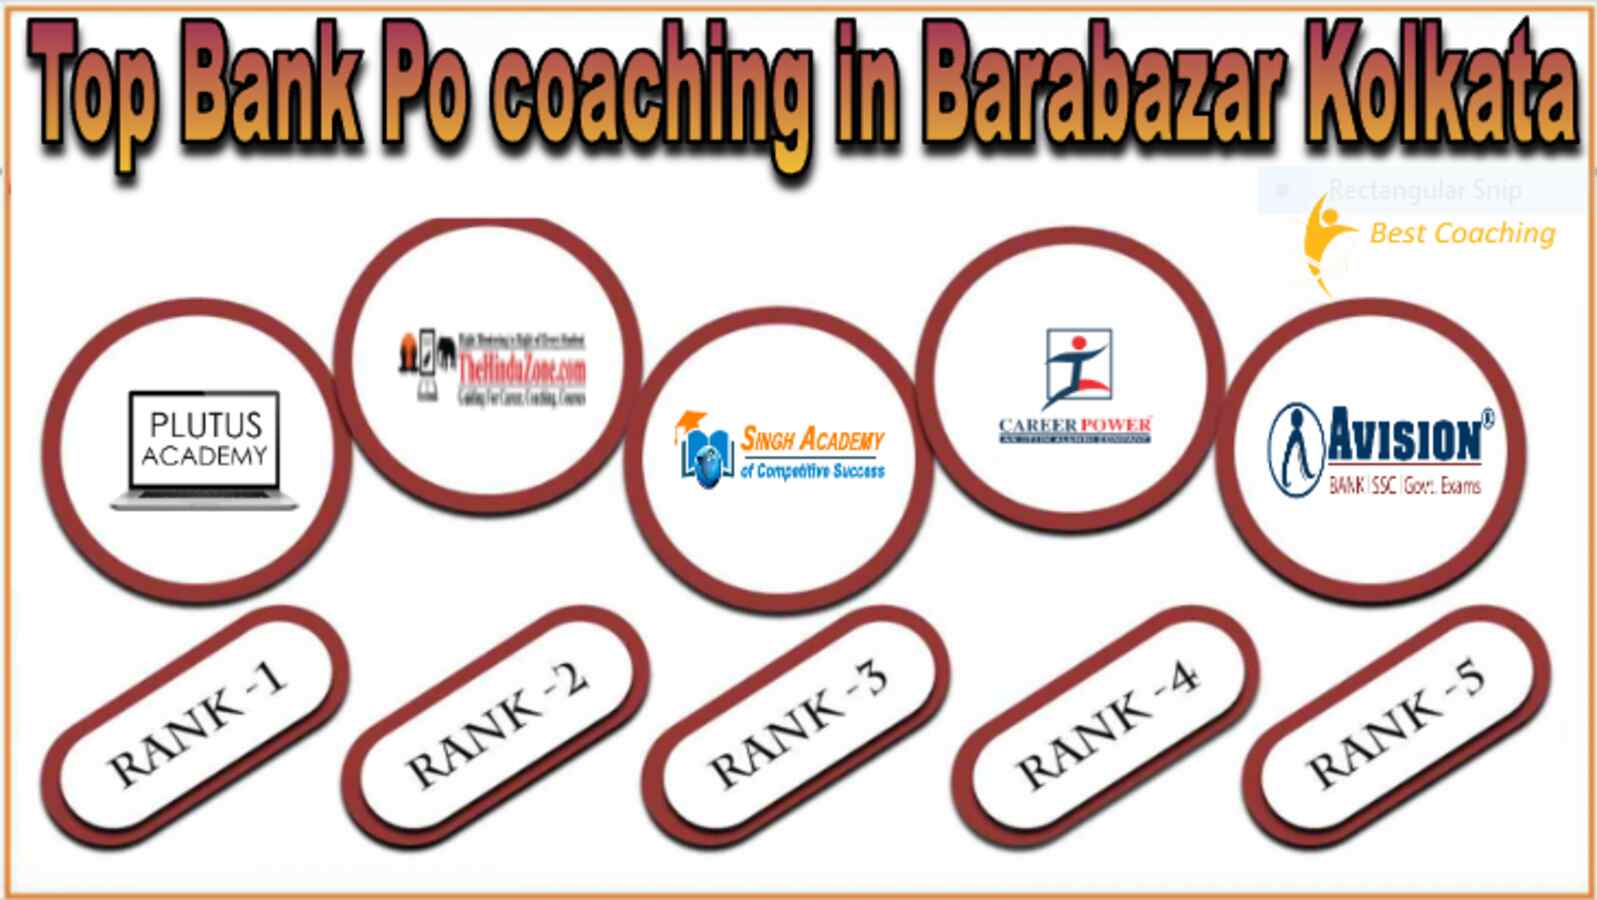 Top Bank Po coaching in Barabazar Kolkata